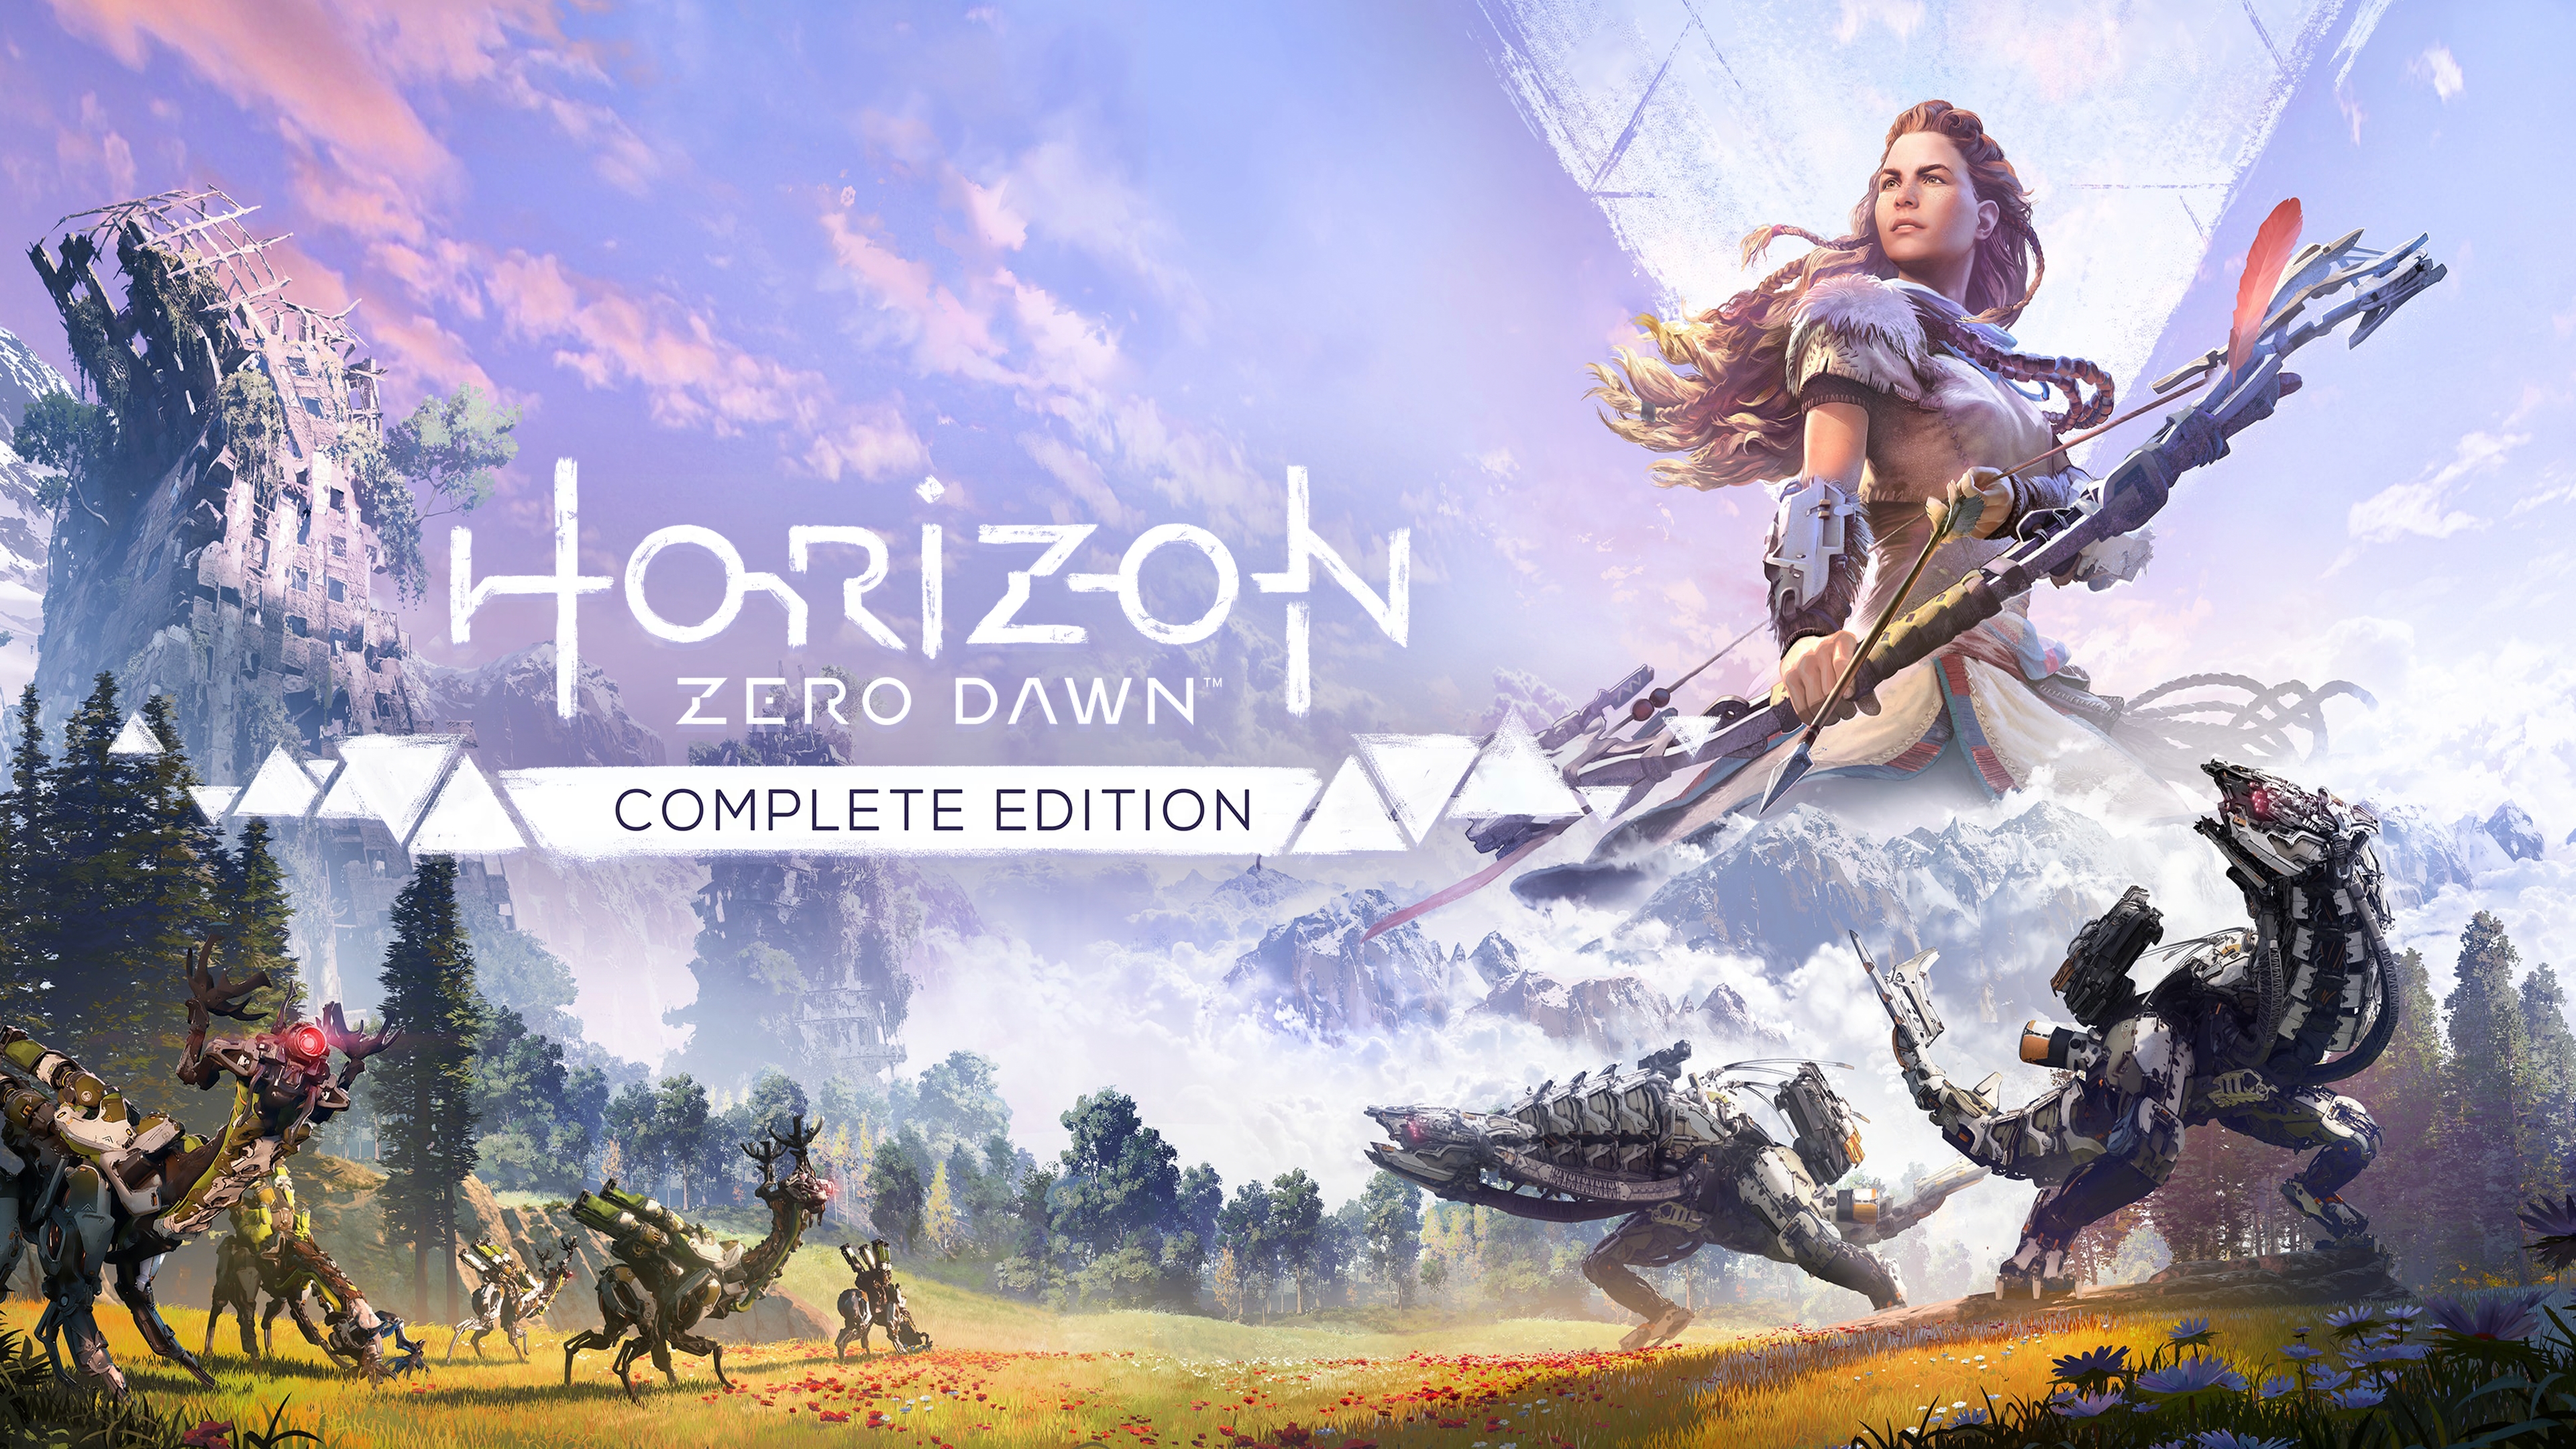 Horizon Zero Dawn (PS4) —